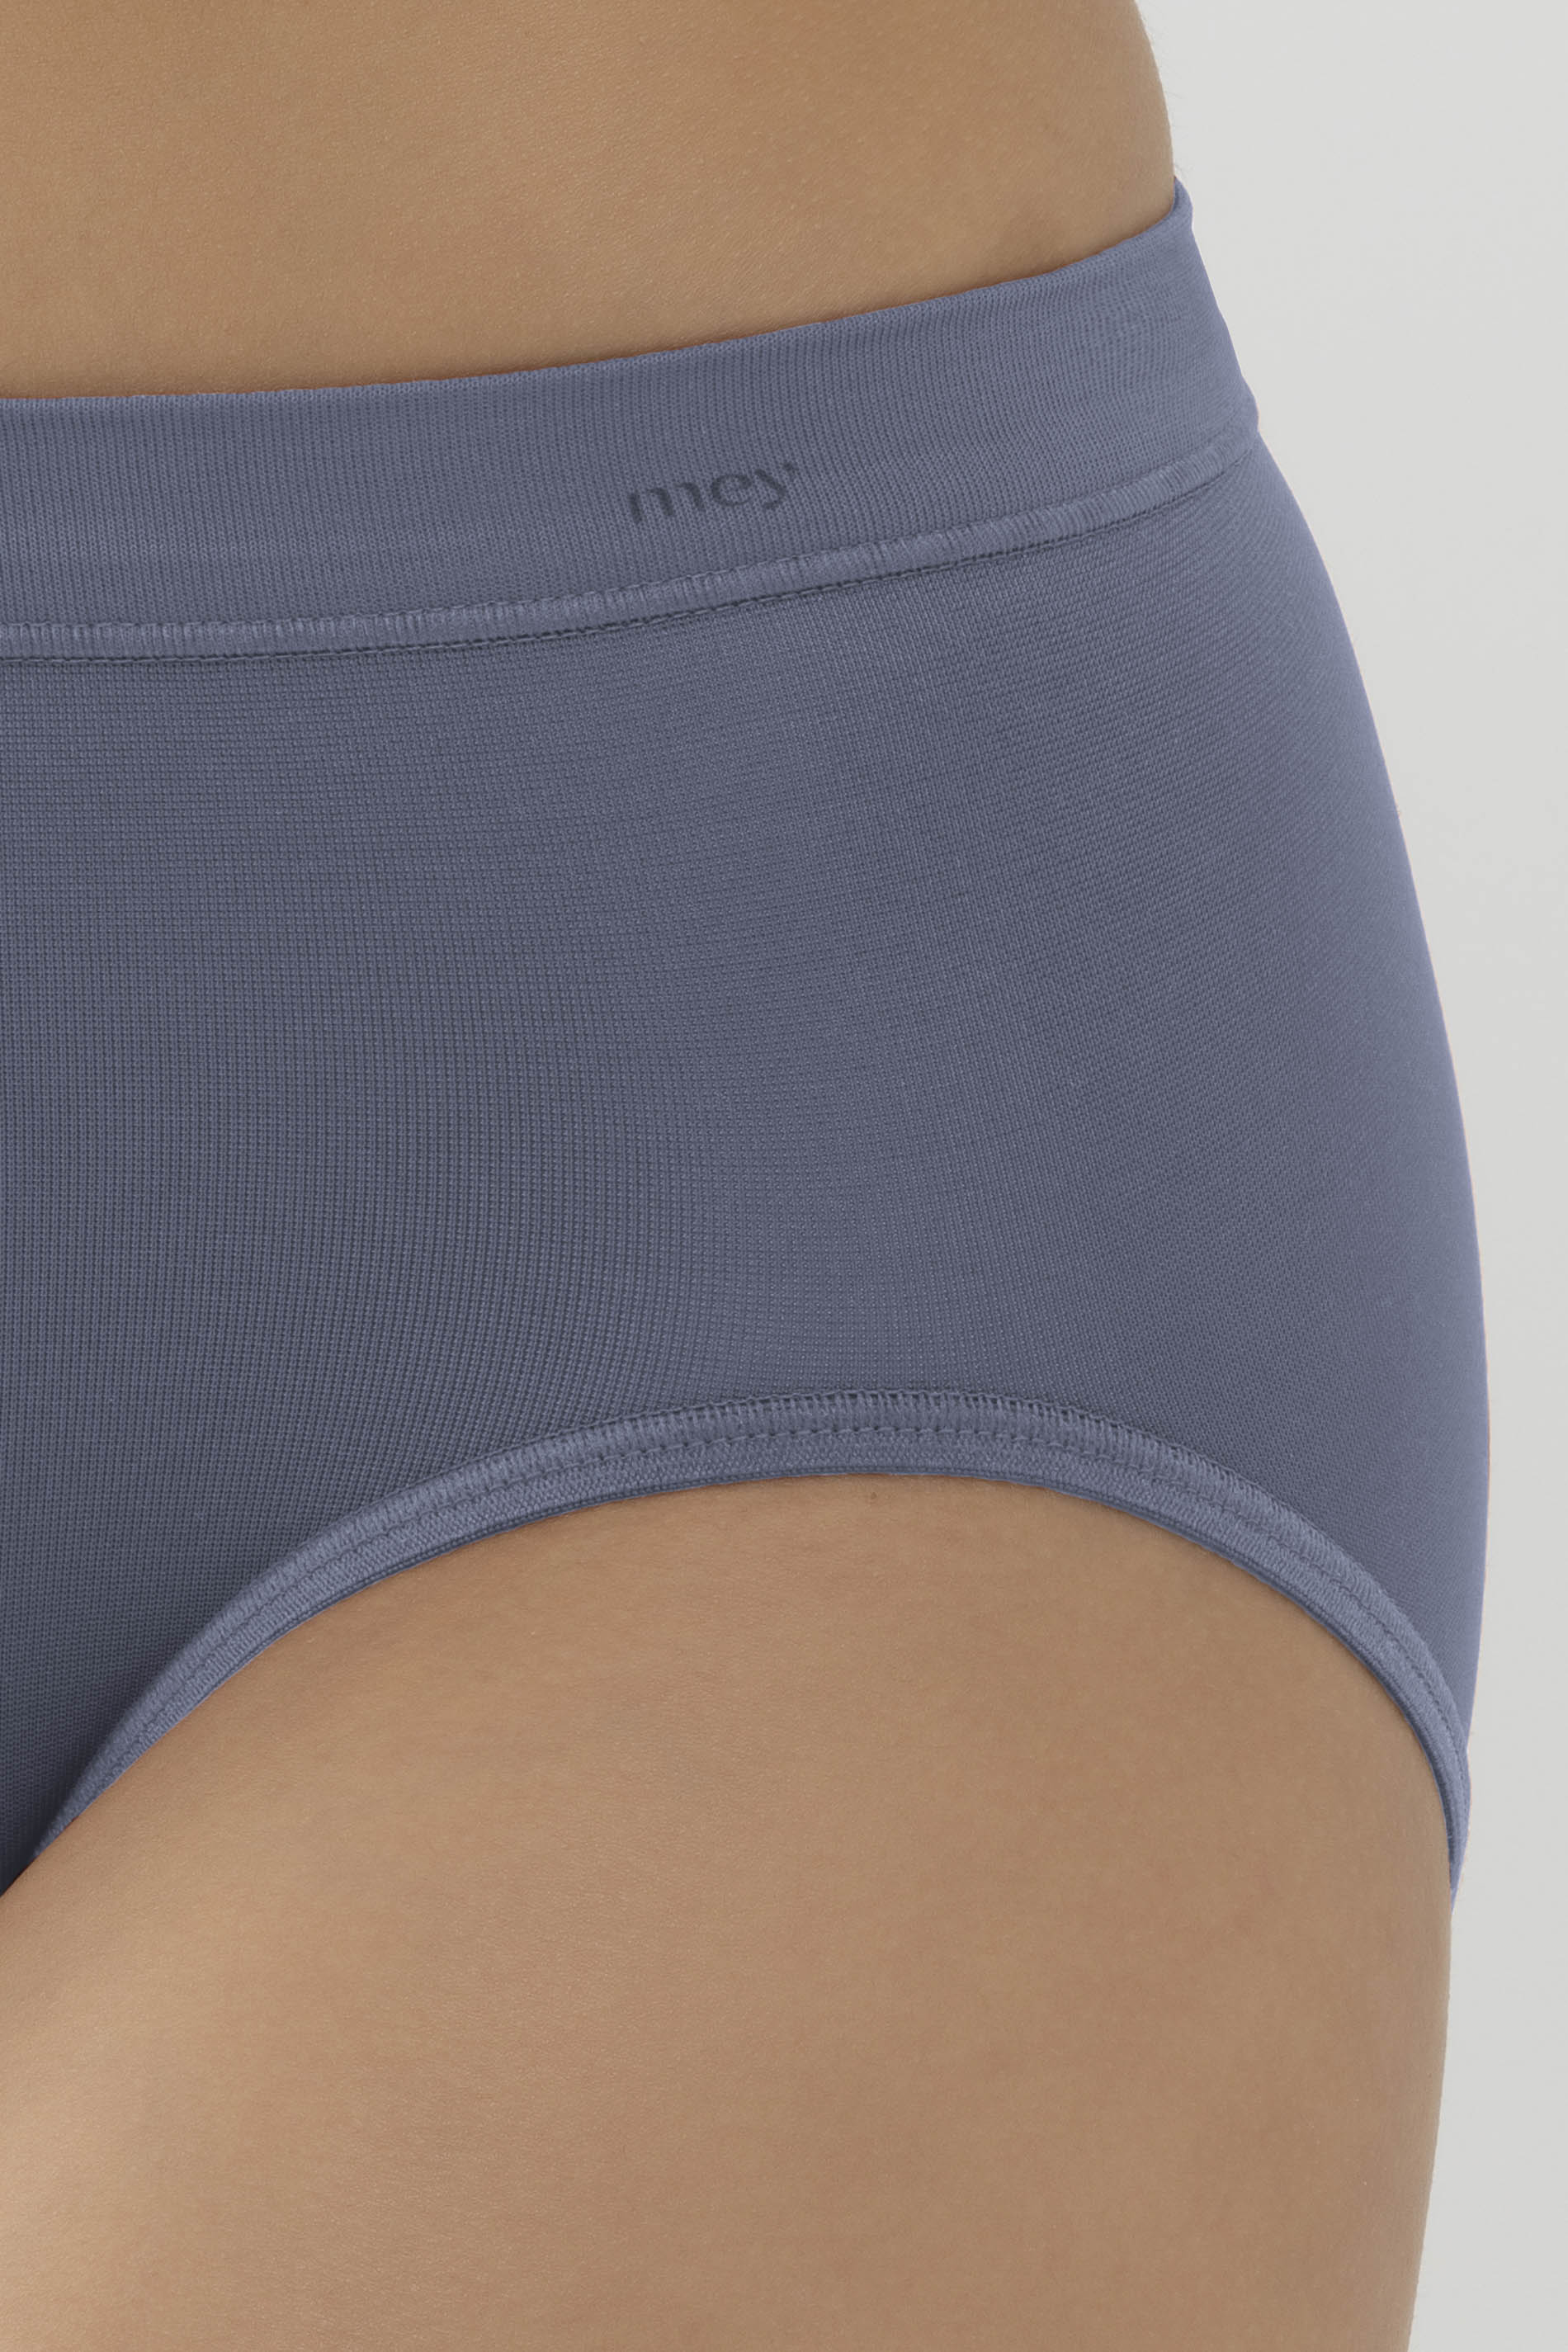 High waist pants Dark Lavender Serie Emotion Detail View 01 | mey®